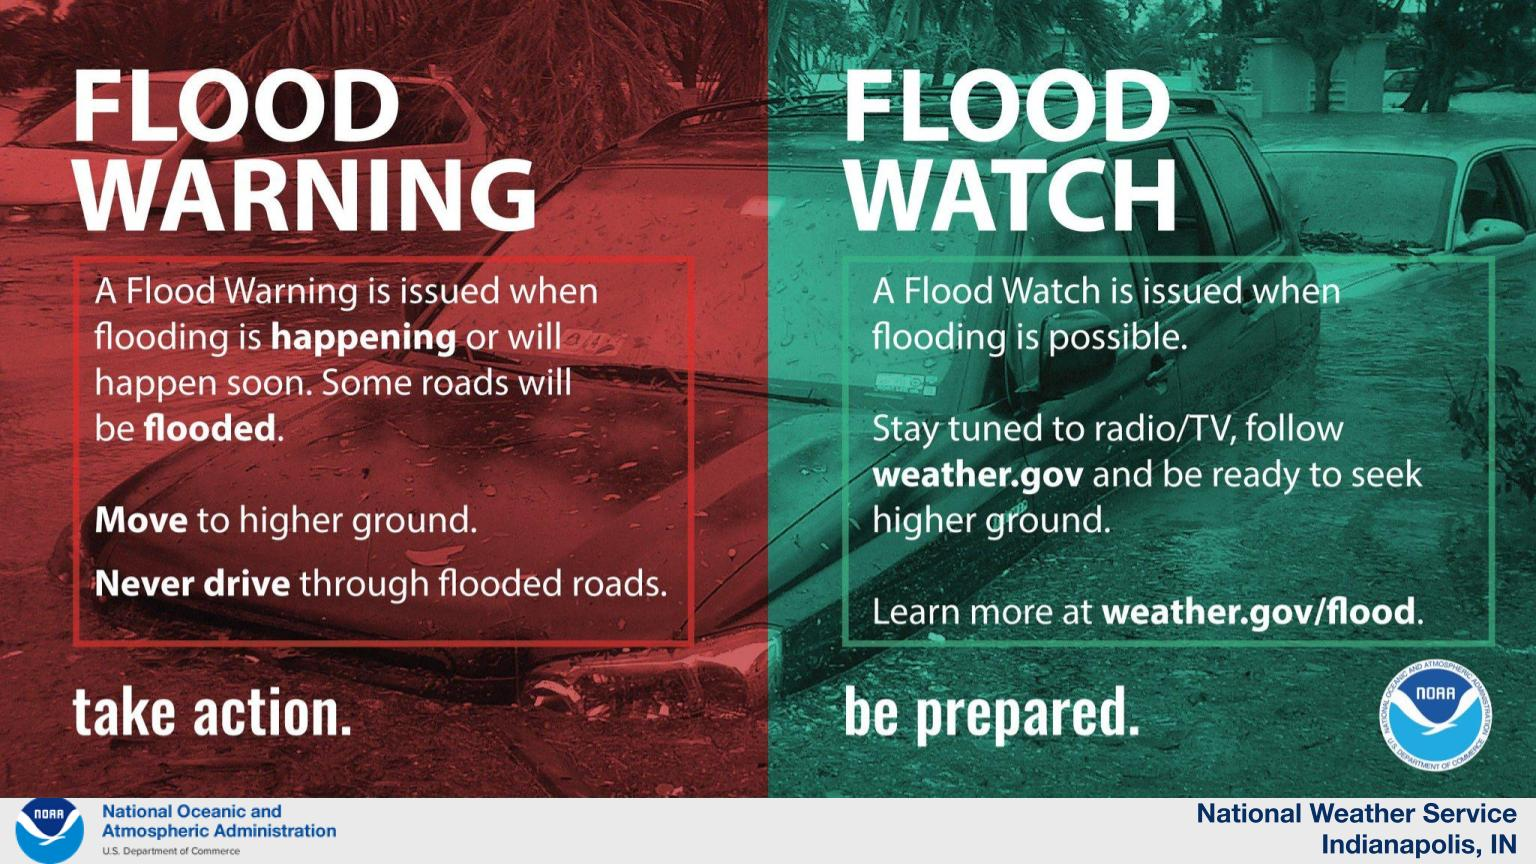 Flood Watch vs Flood Warning